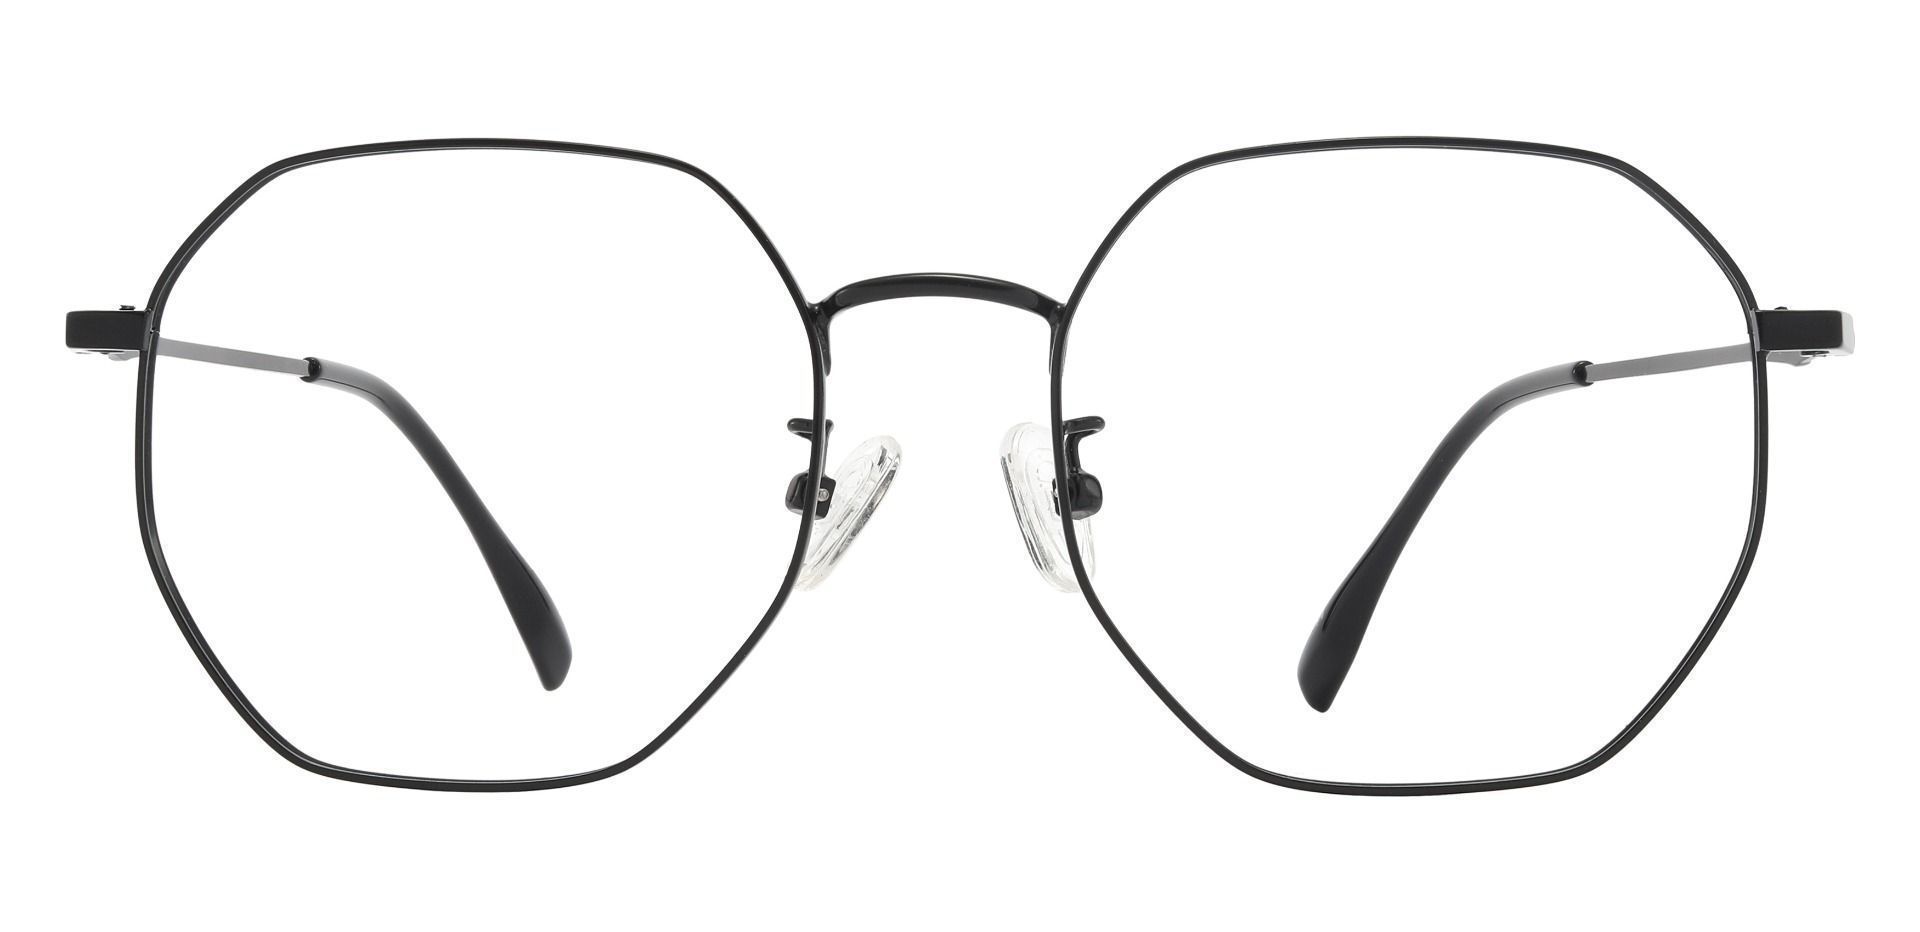 Cowan Geometric Progressive Glasses - Black